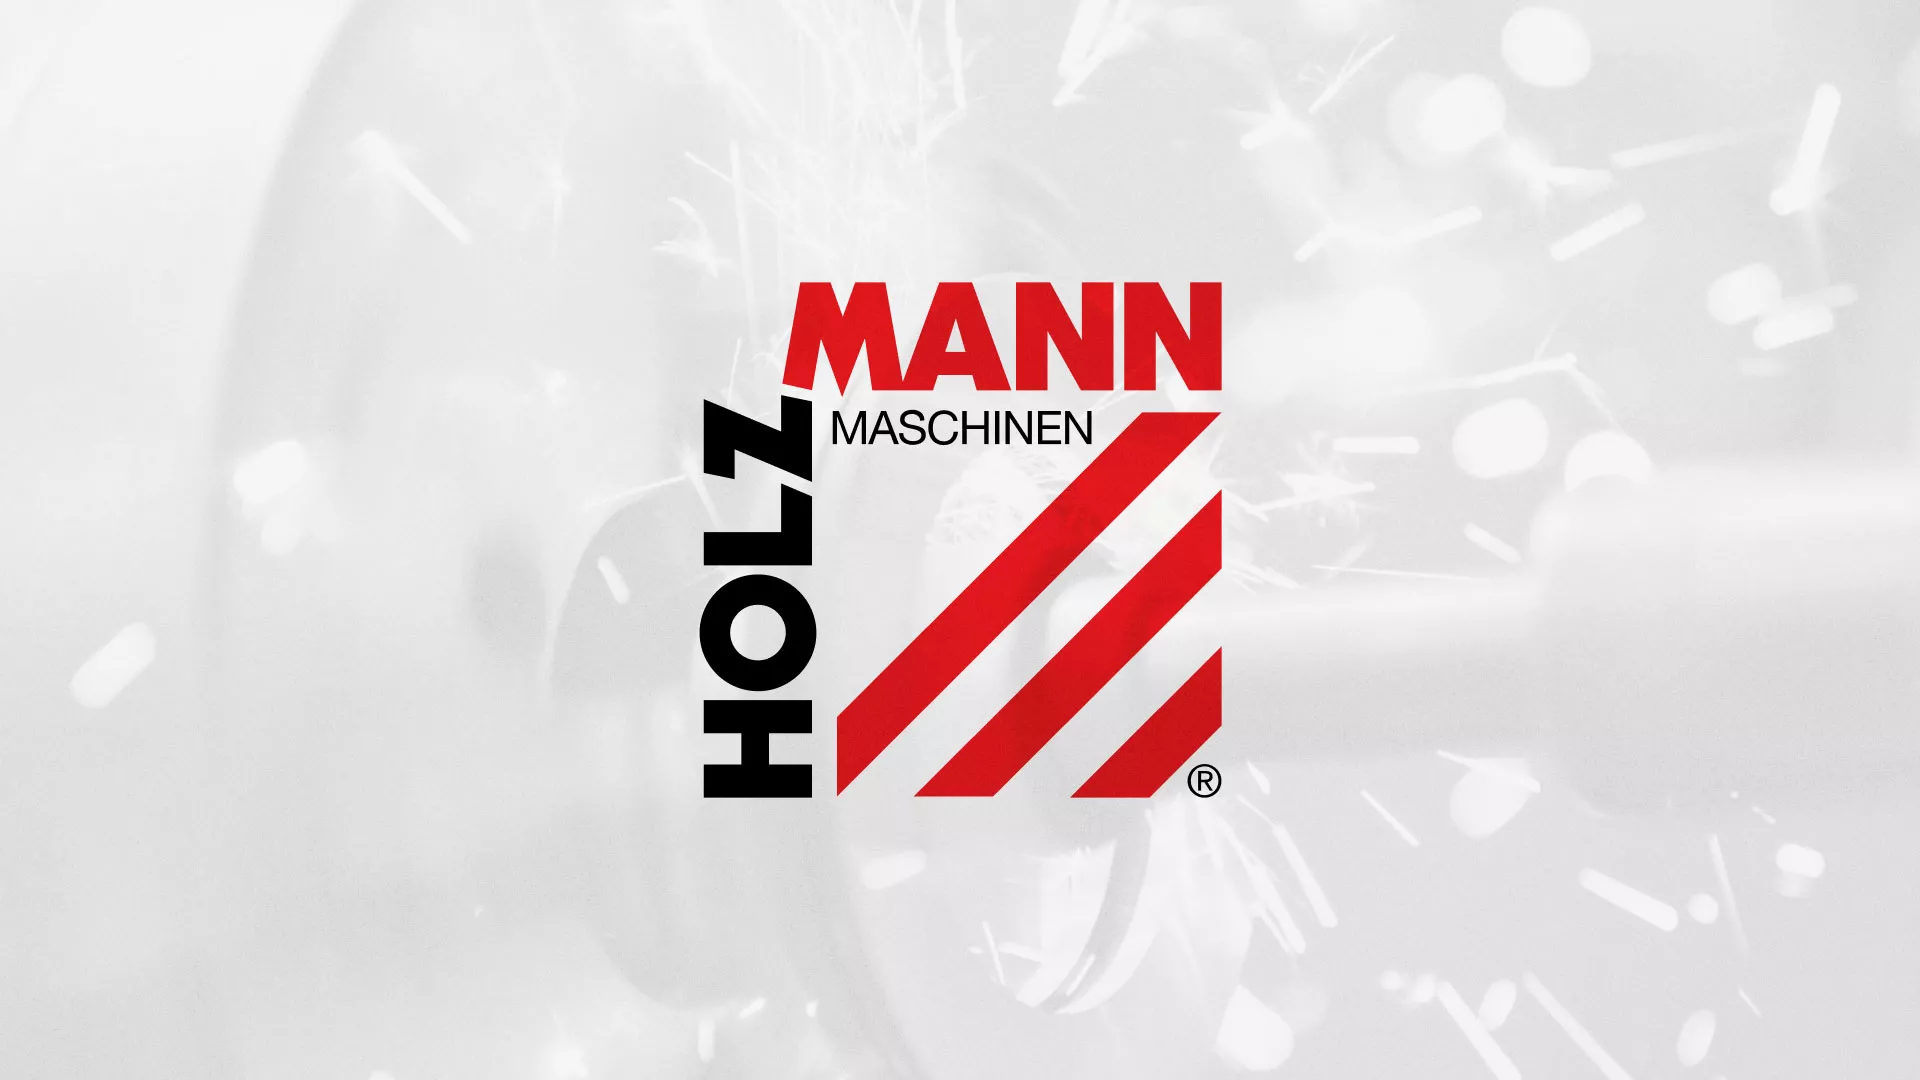 Создание сайта компании «HOLZMANN Maschinen GmbH» в Кирово-Чепецке